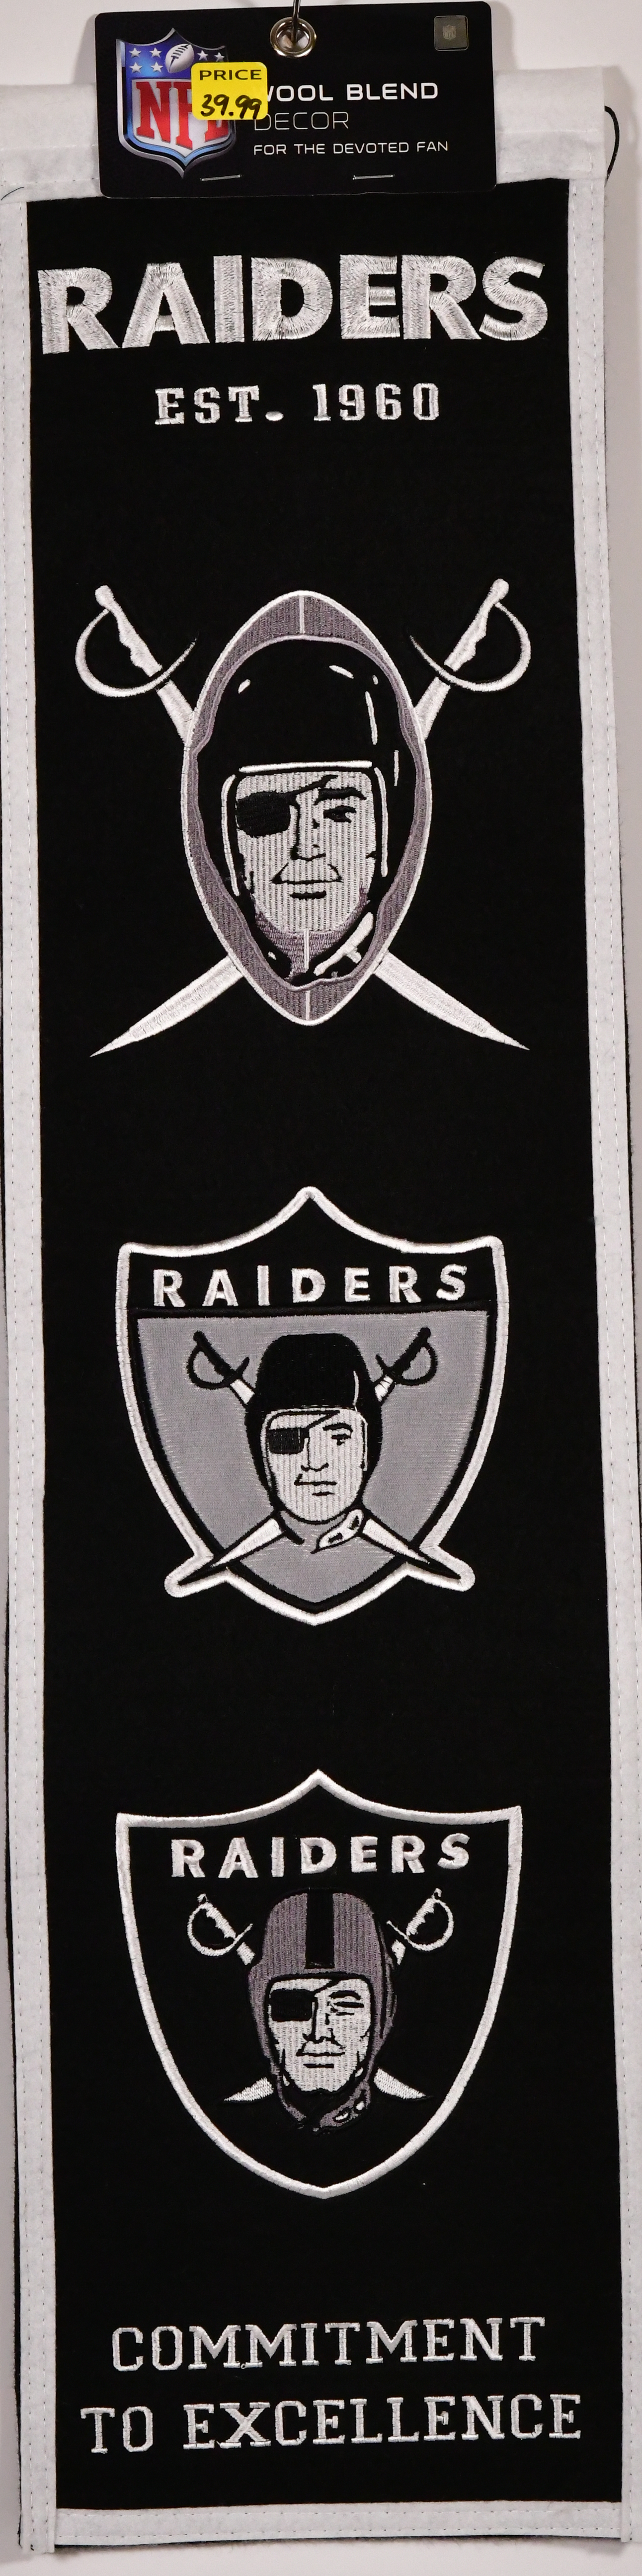 Las Vegas Raiders Heritage Banner – Sports Images & More LLC